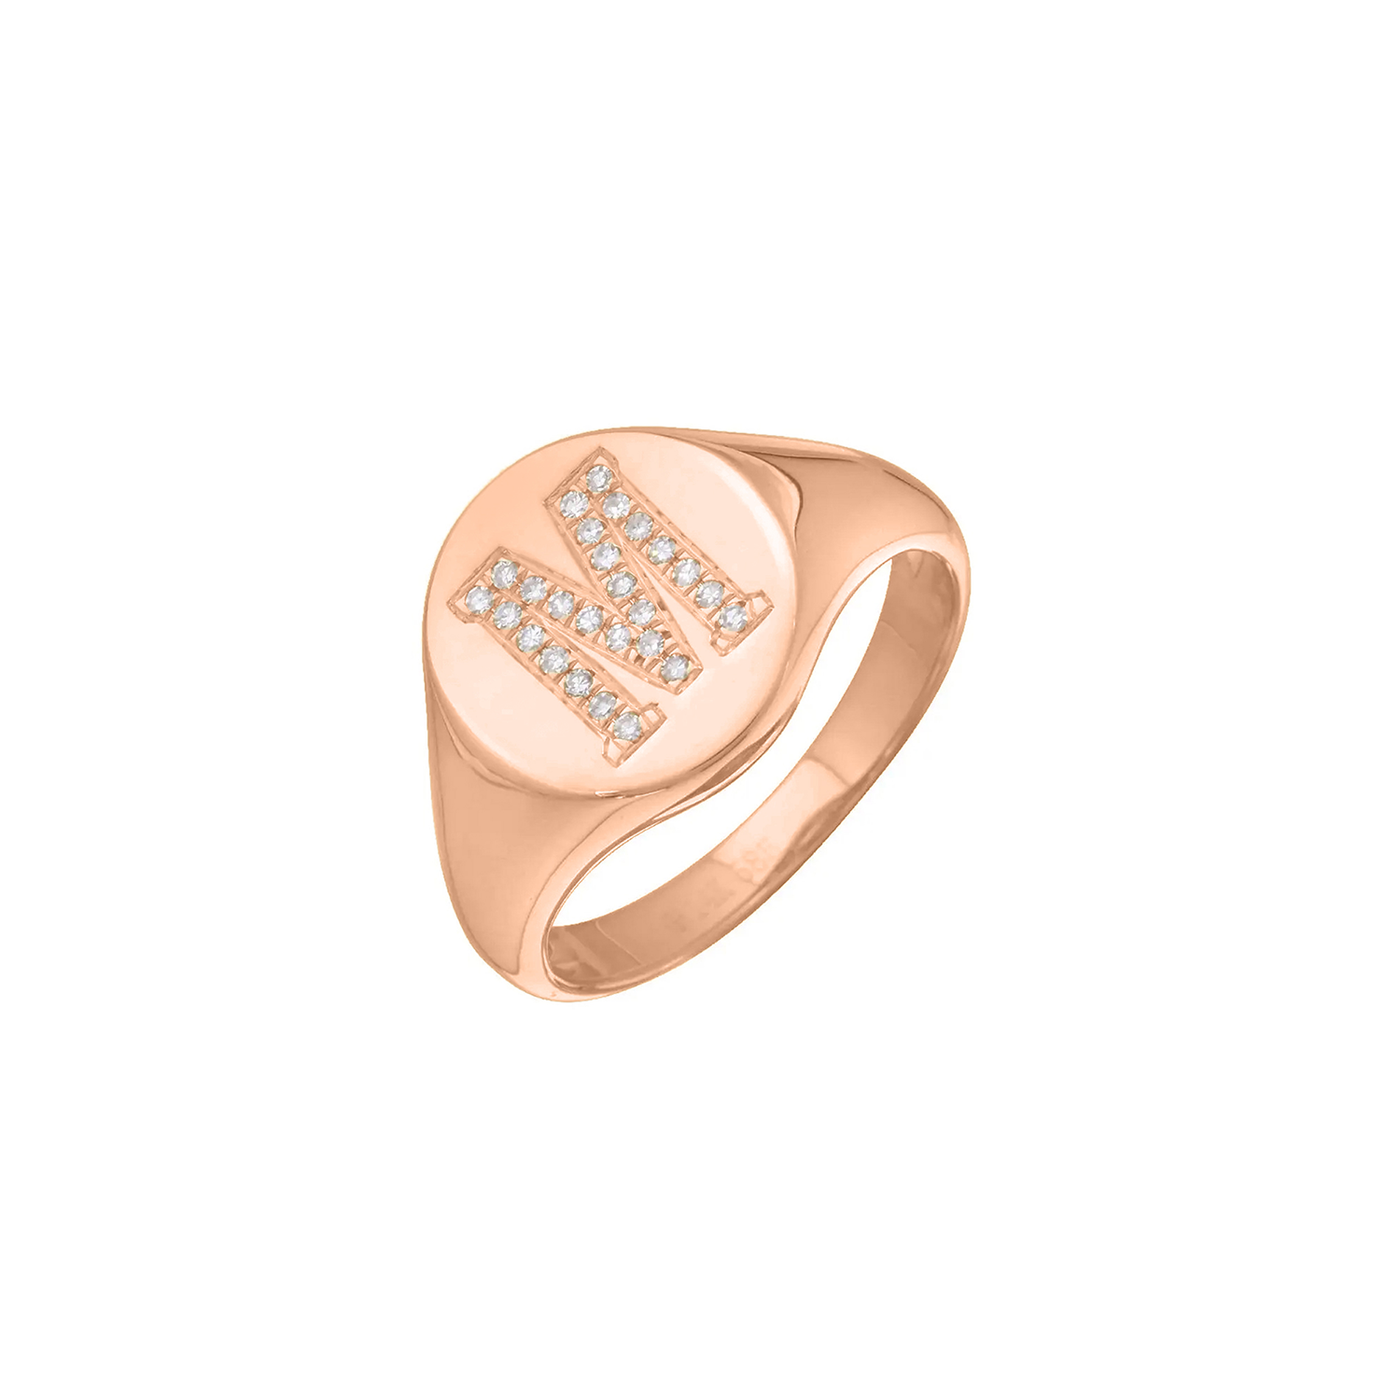 Copy of Initial Signet Ring (rose)